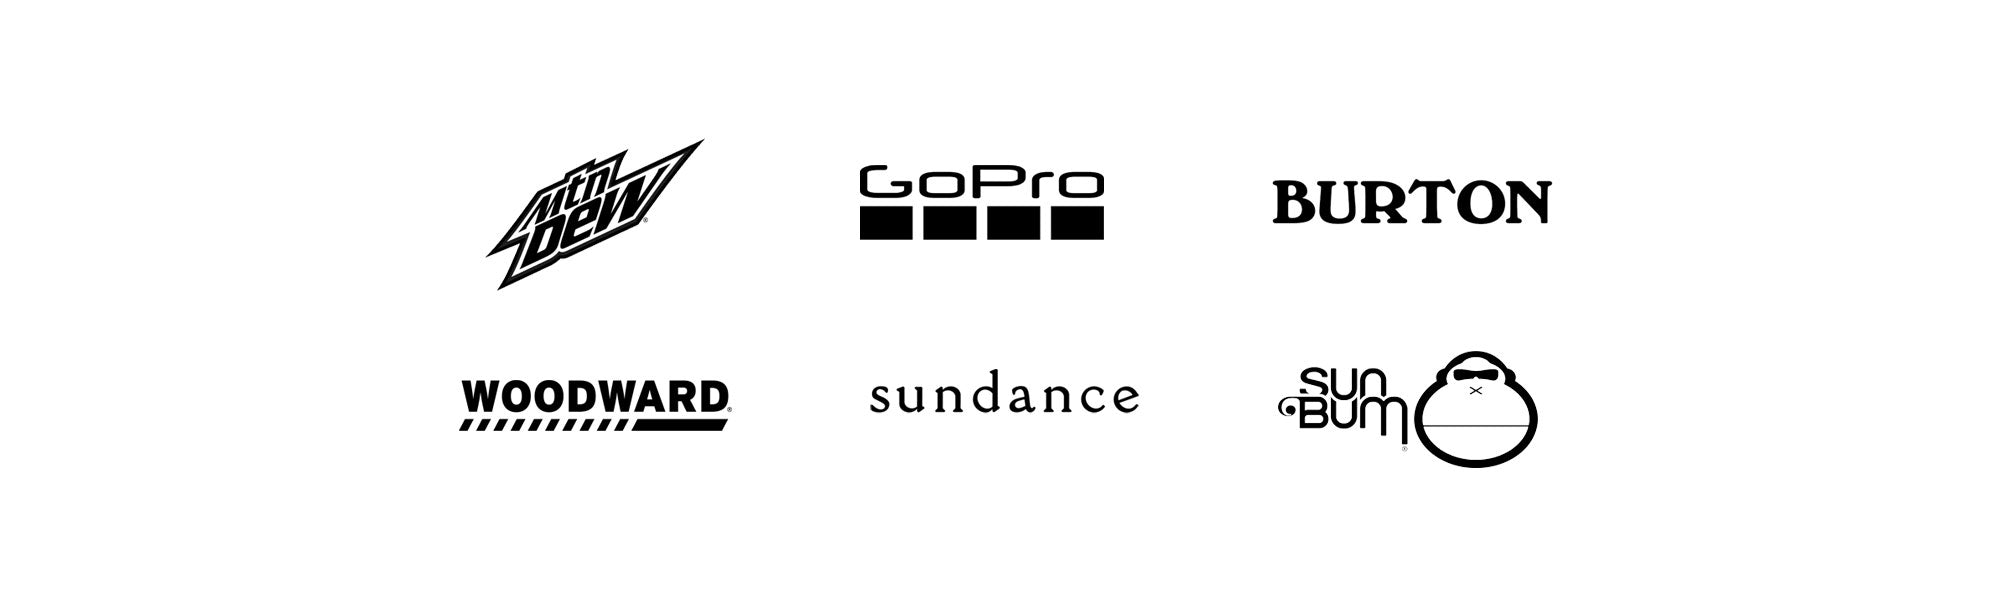 Companies We've Worked with - MountainDew GoPro, Burton, Woodward, Sundance, Sunbum